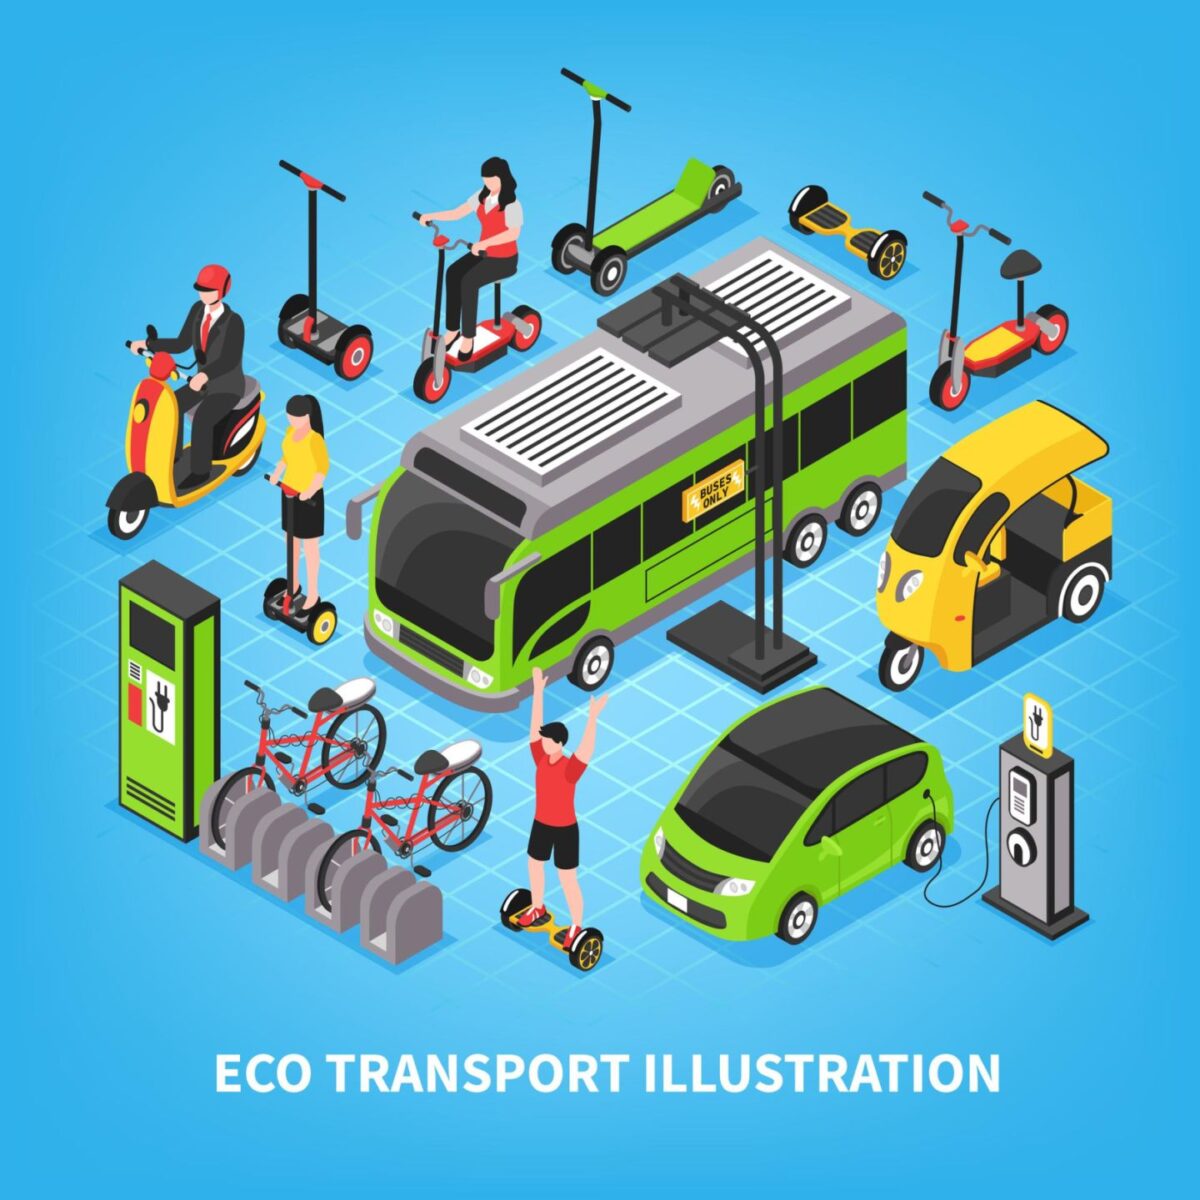 Eco Transport Image by macrovector on Freepik